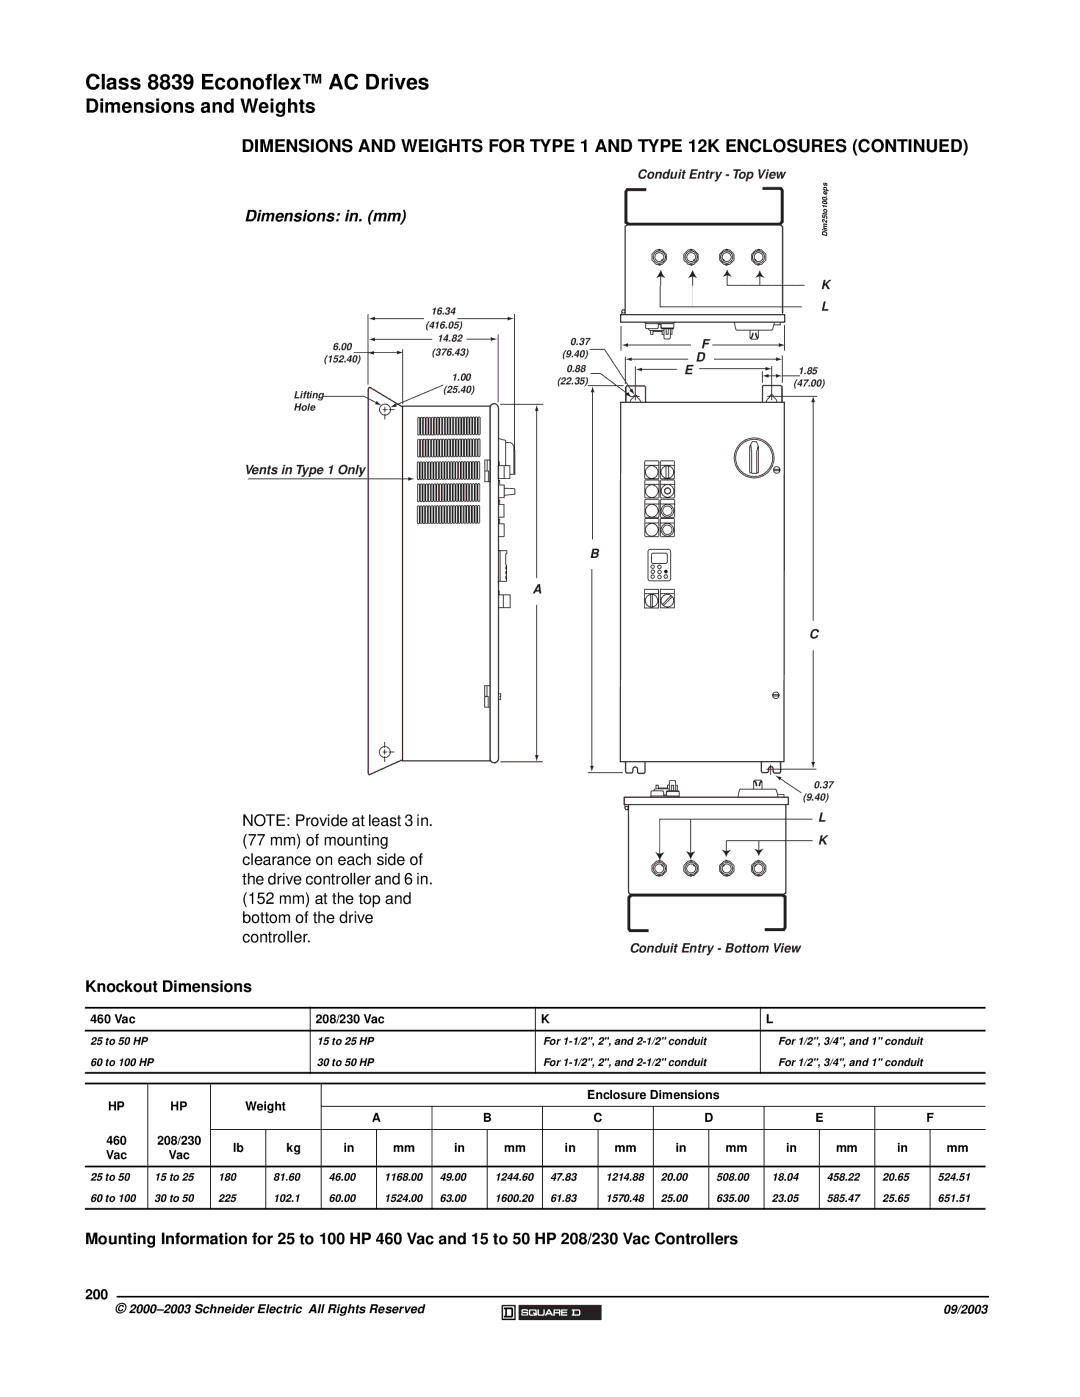 Schneider Electric 58 TRX manual 200, 460 208/230 Vac 